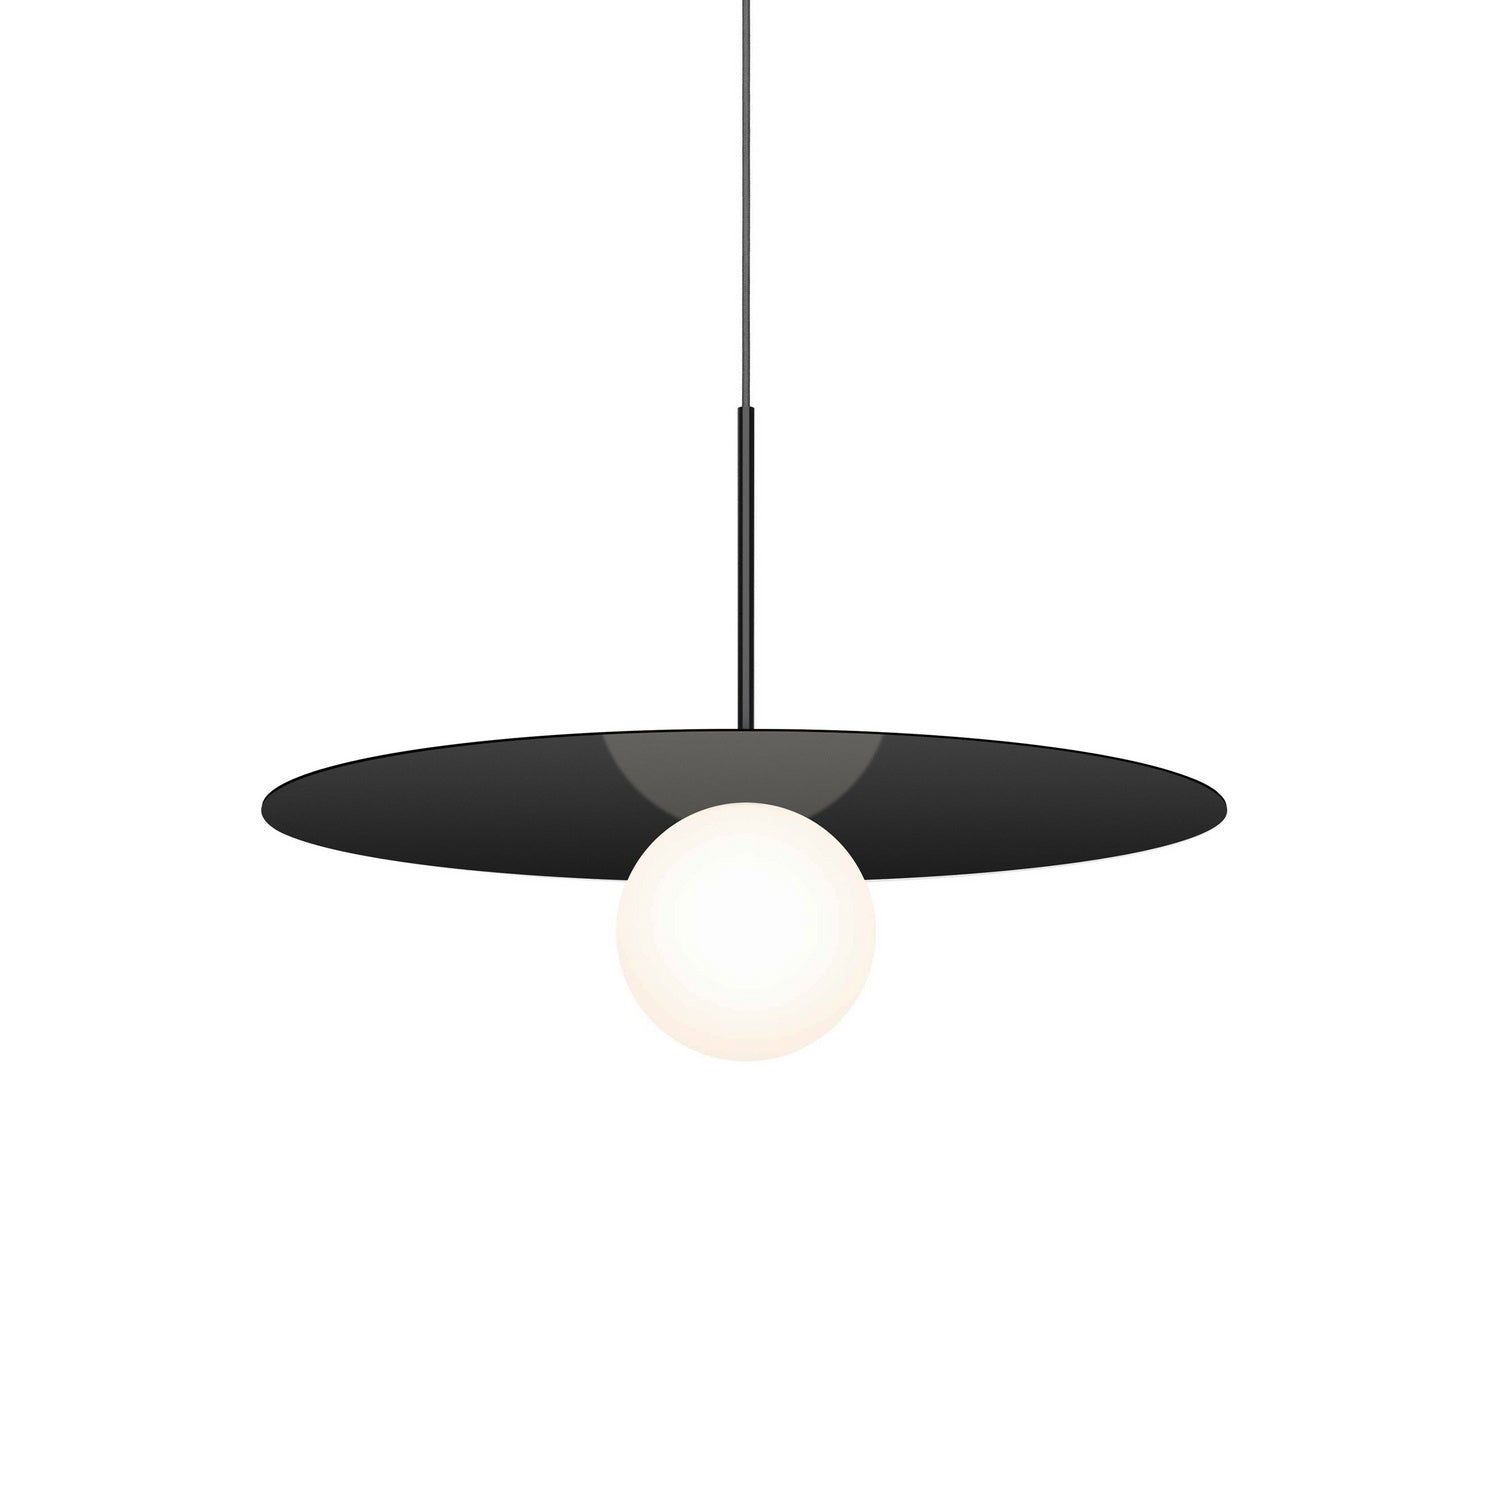 Pablo Designs - LED Pendant - Bola Disc - Black- Union Lighting Luminaires Decor